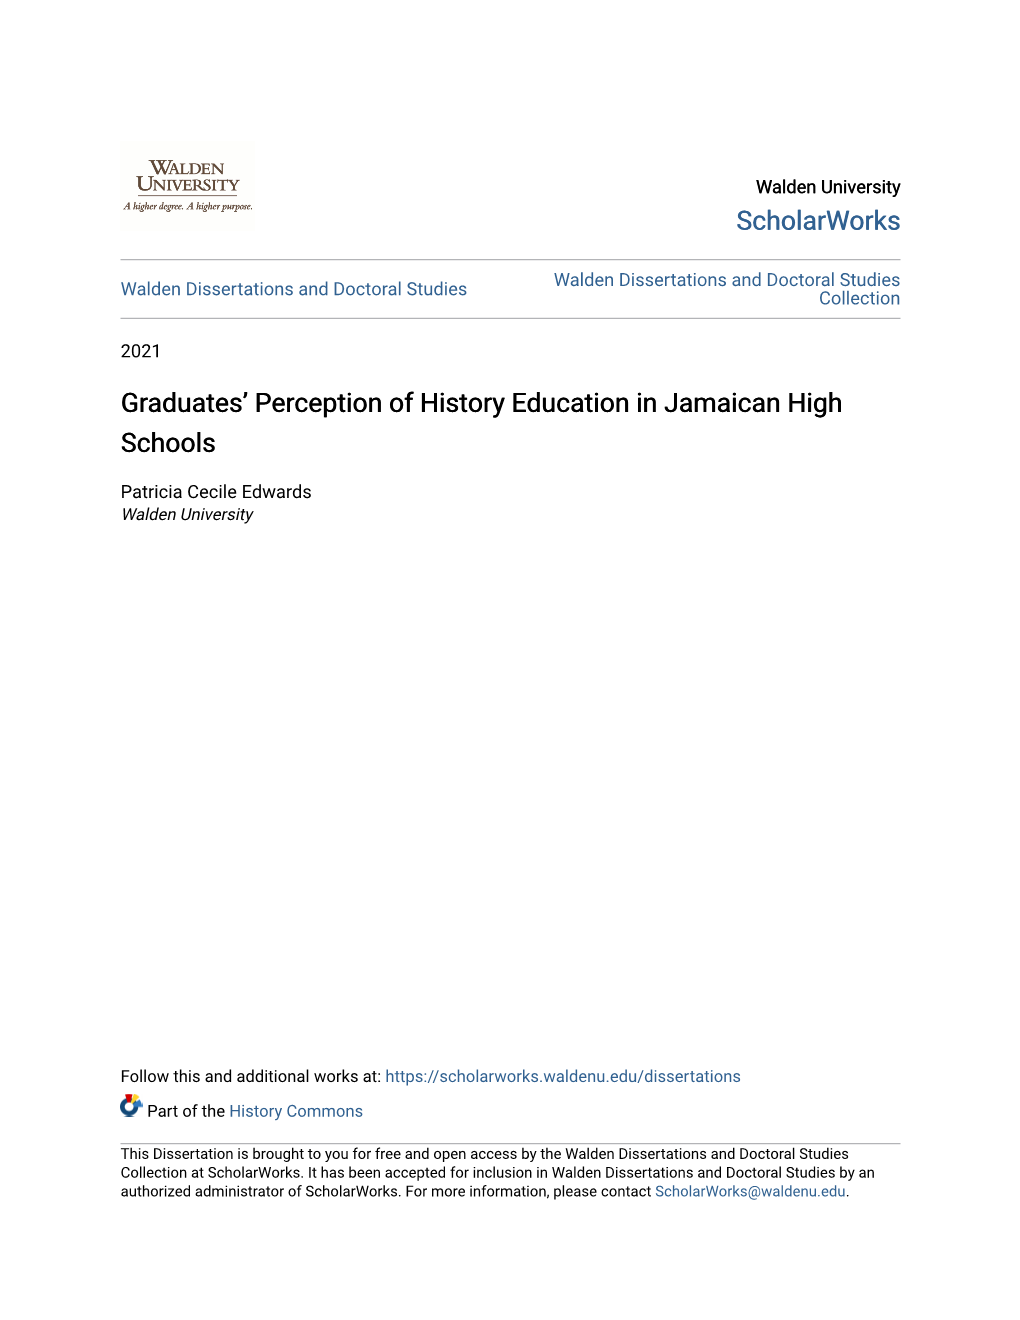 Graduates' Perception of History Education in Jamaican High Schools